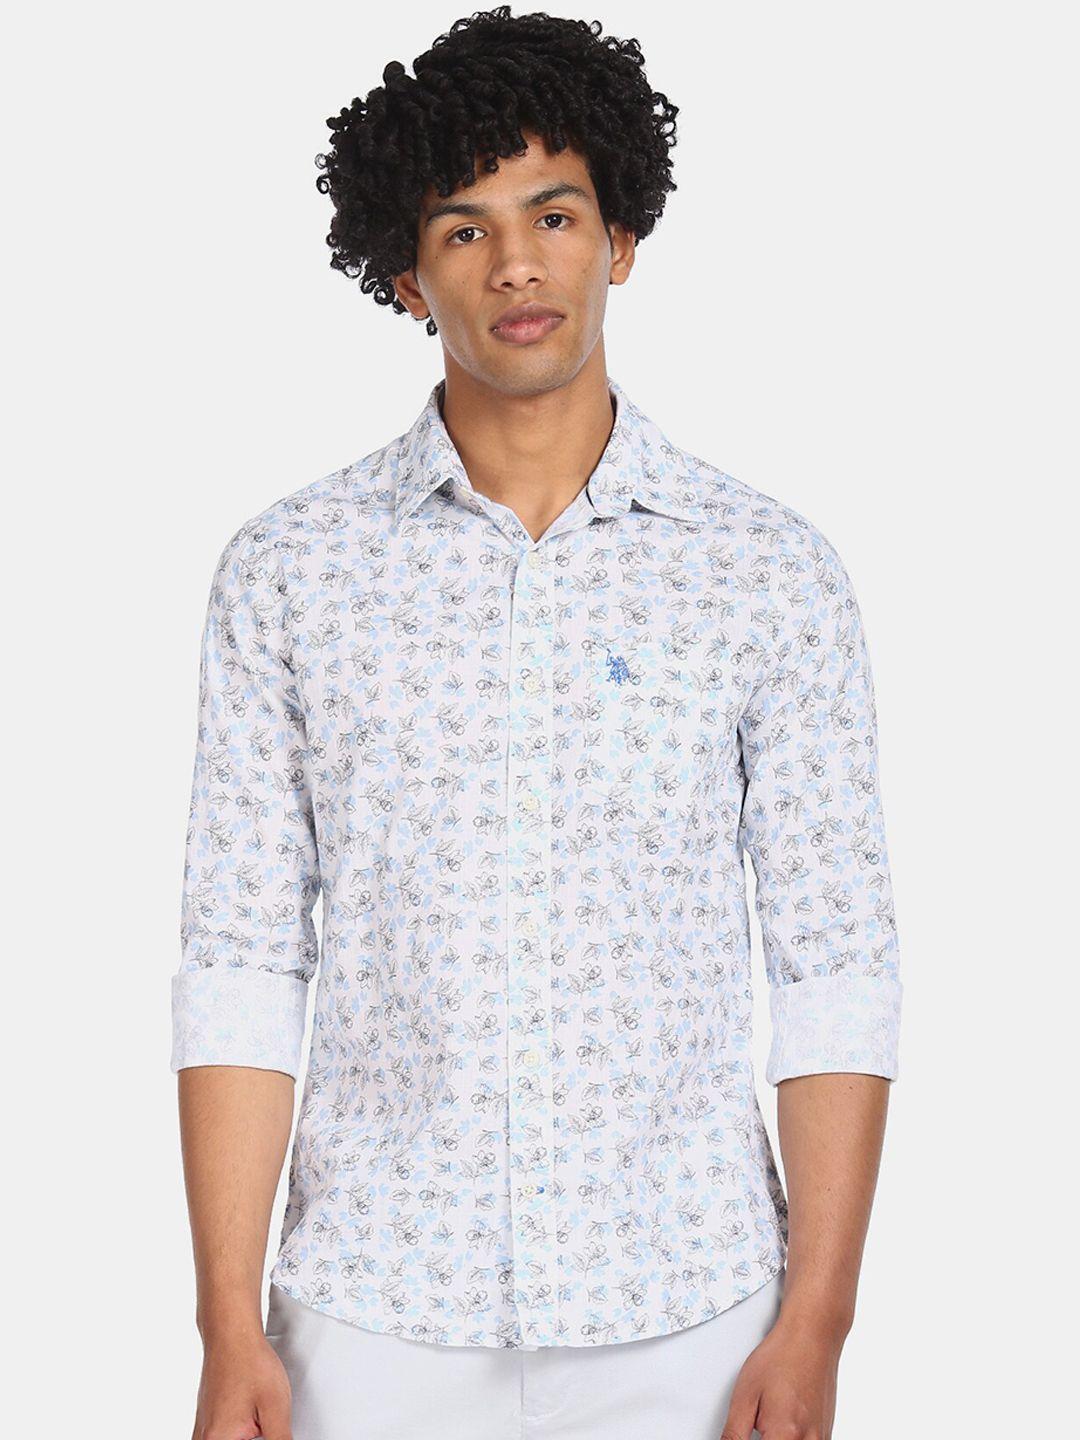 u.s. polo assn. men white & blue regular fit printed pure cotton casual shirt